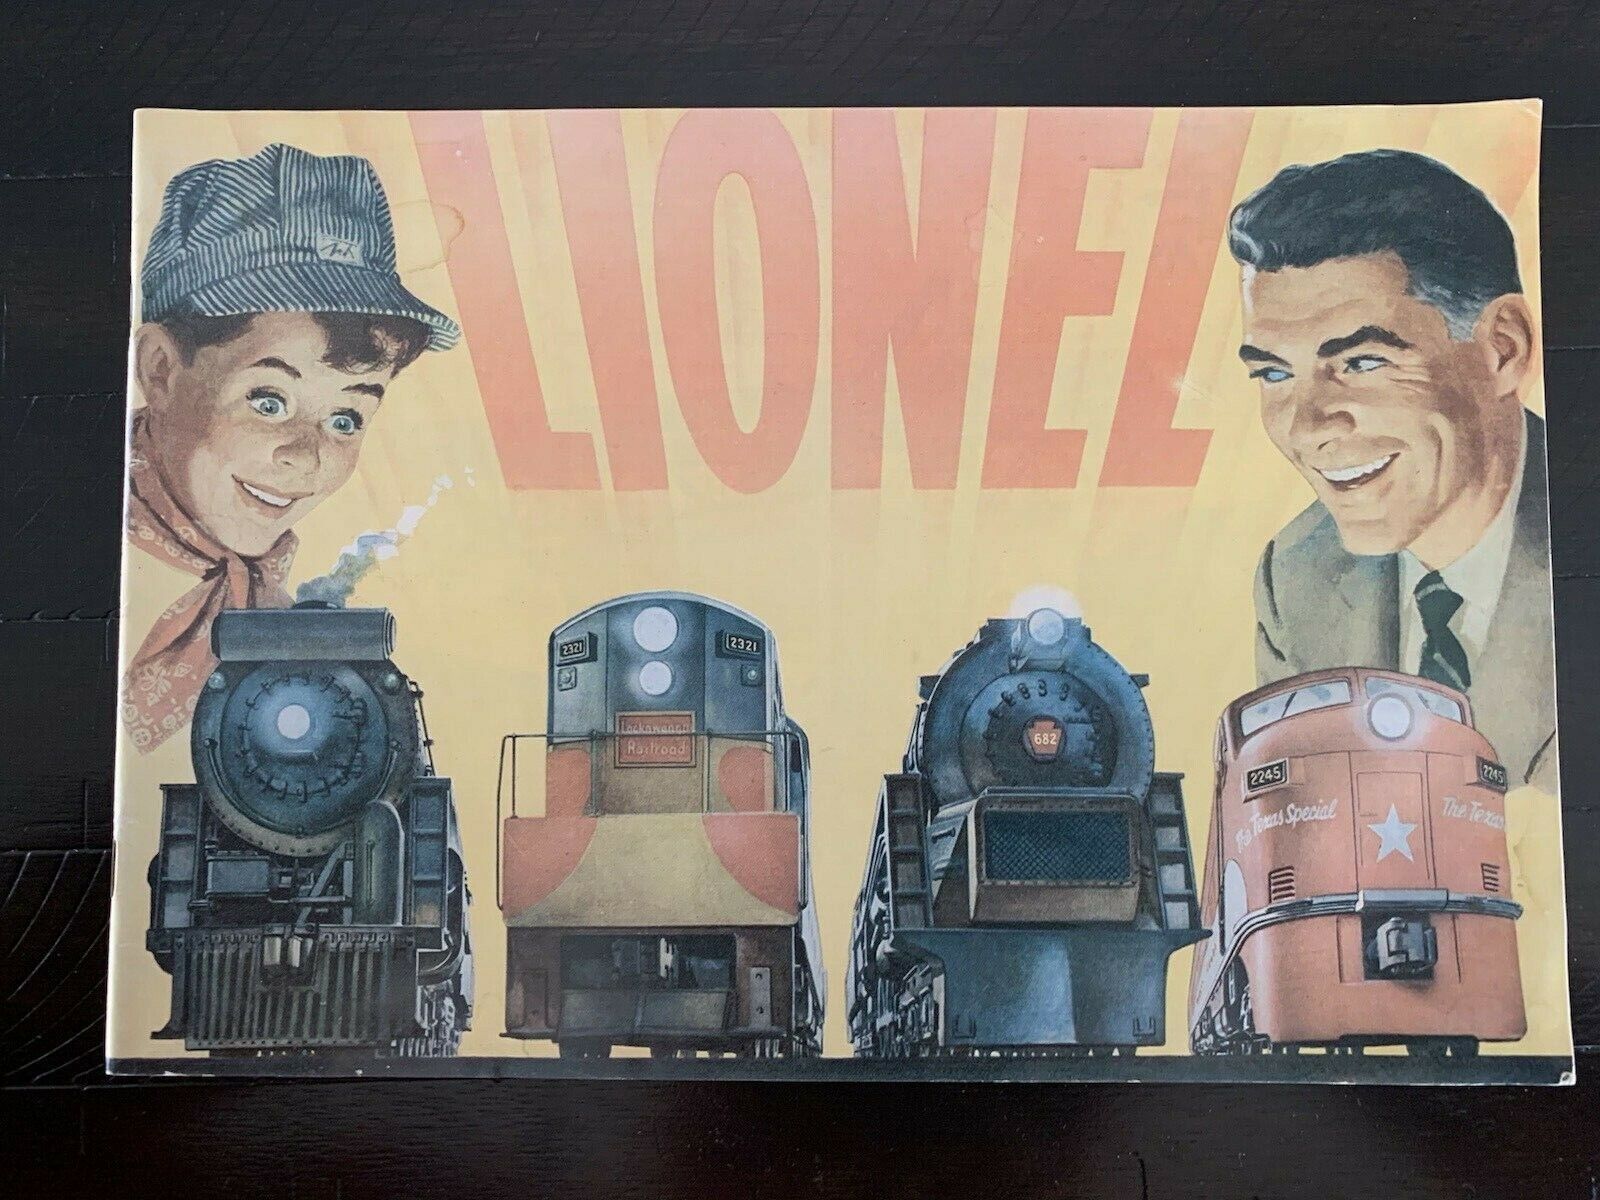 Lionel 1954 Trains and accessories catalog - vintage